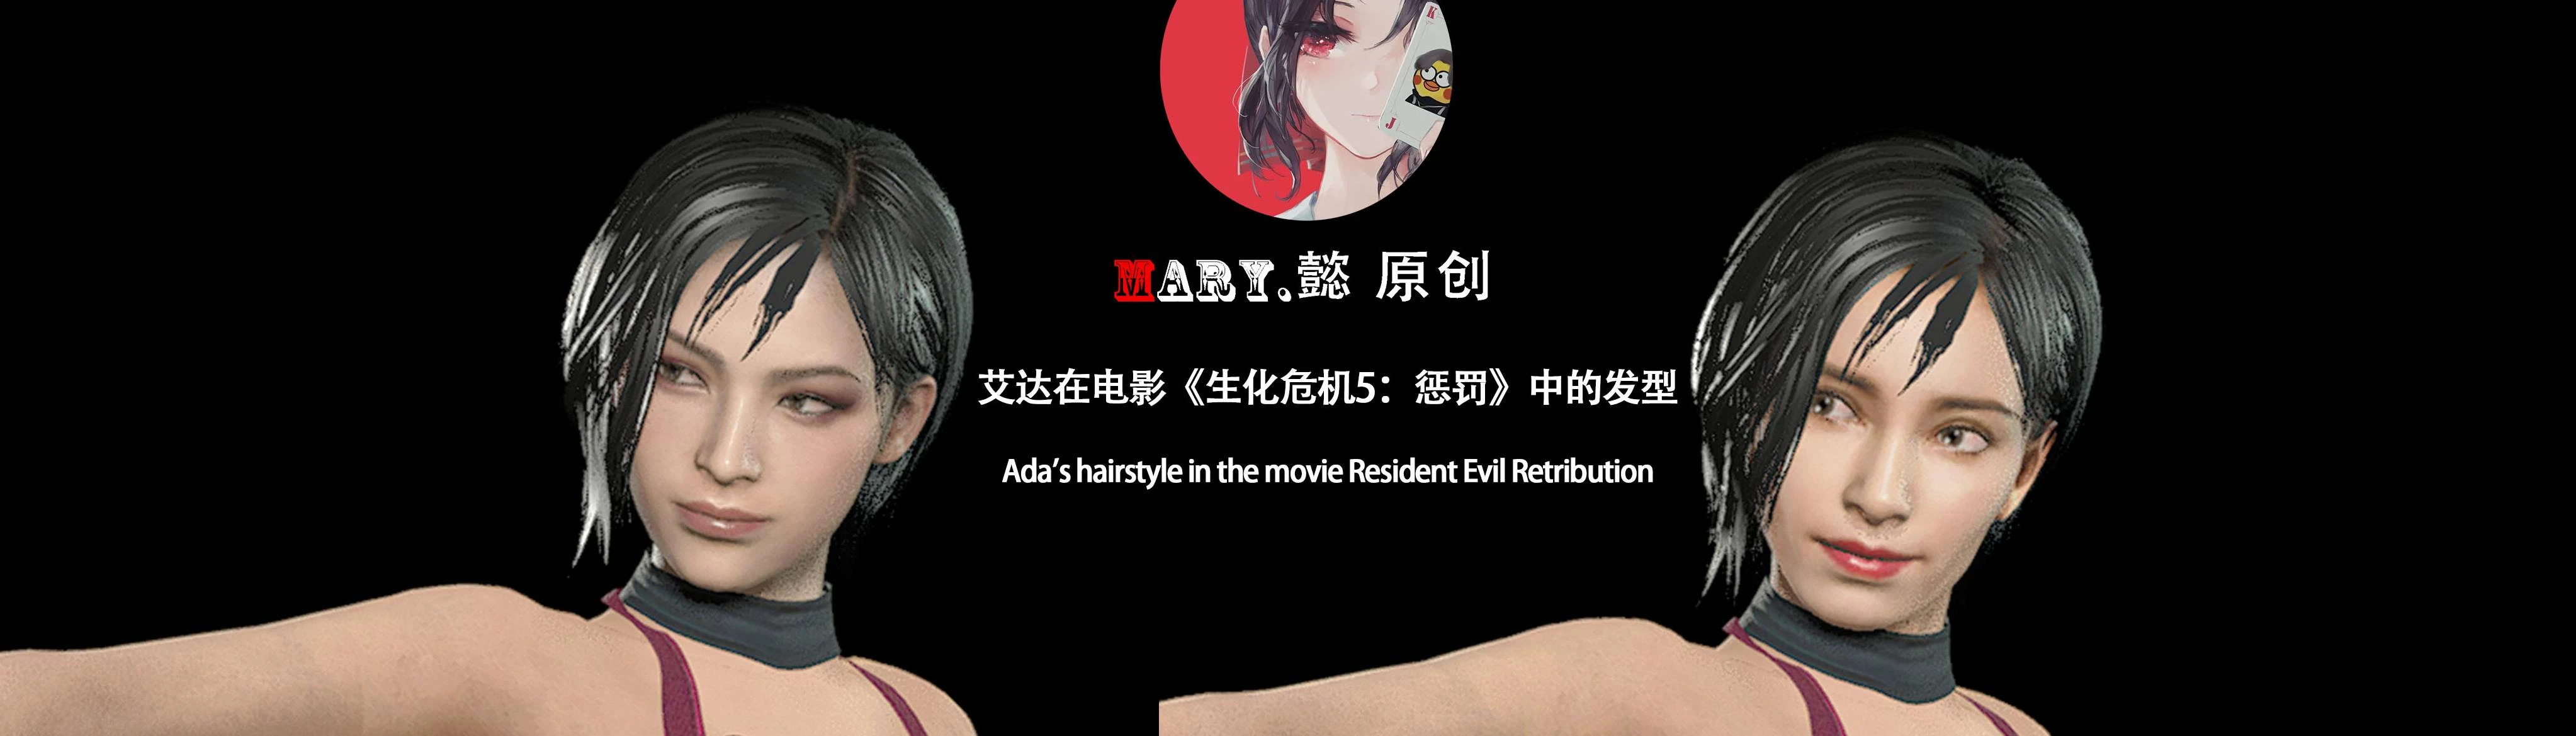 HD wallpaper: movies resident evil retribution ada wong li bingbing, one  person